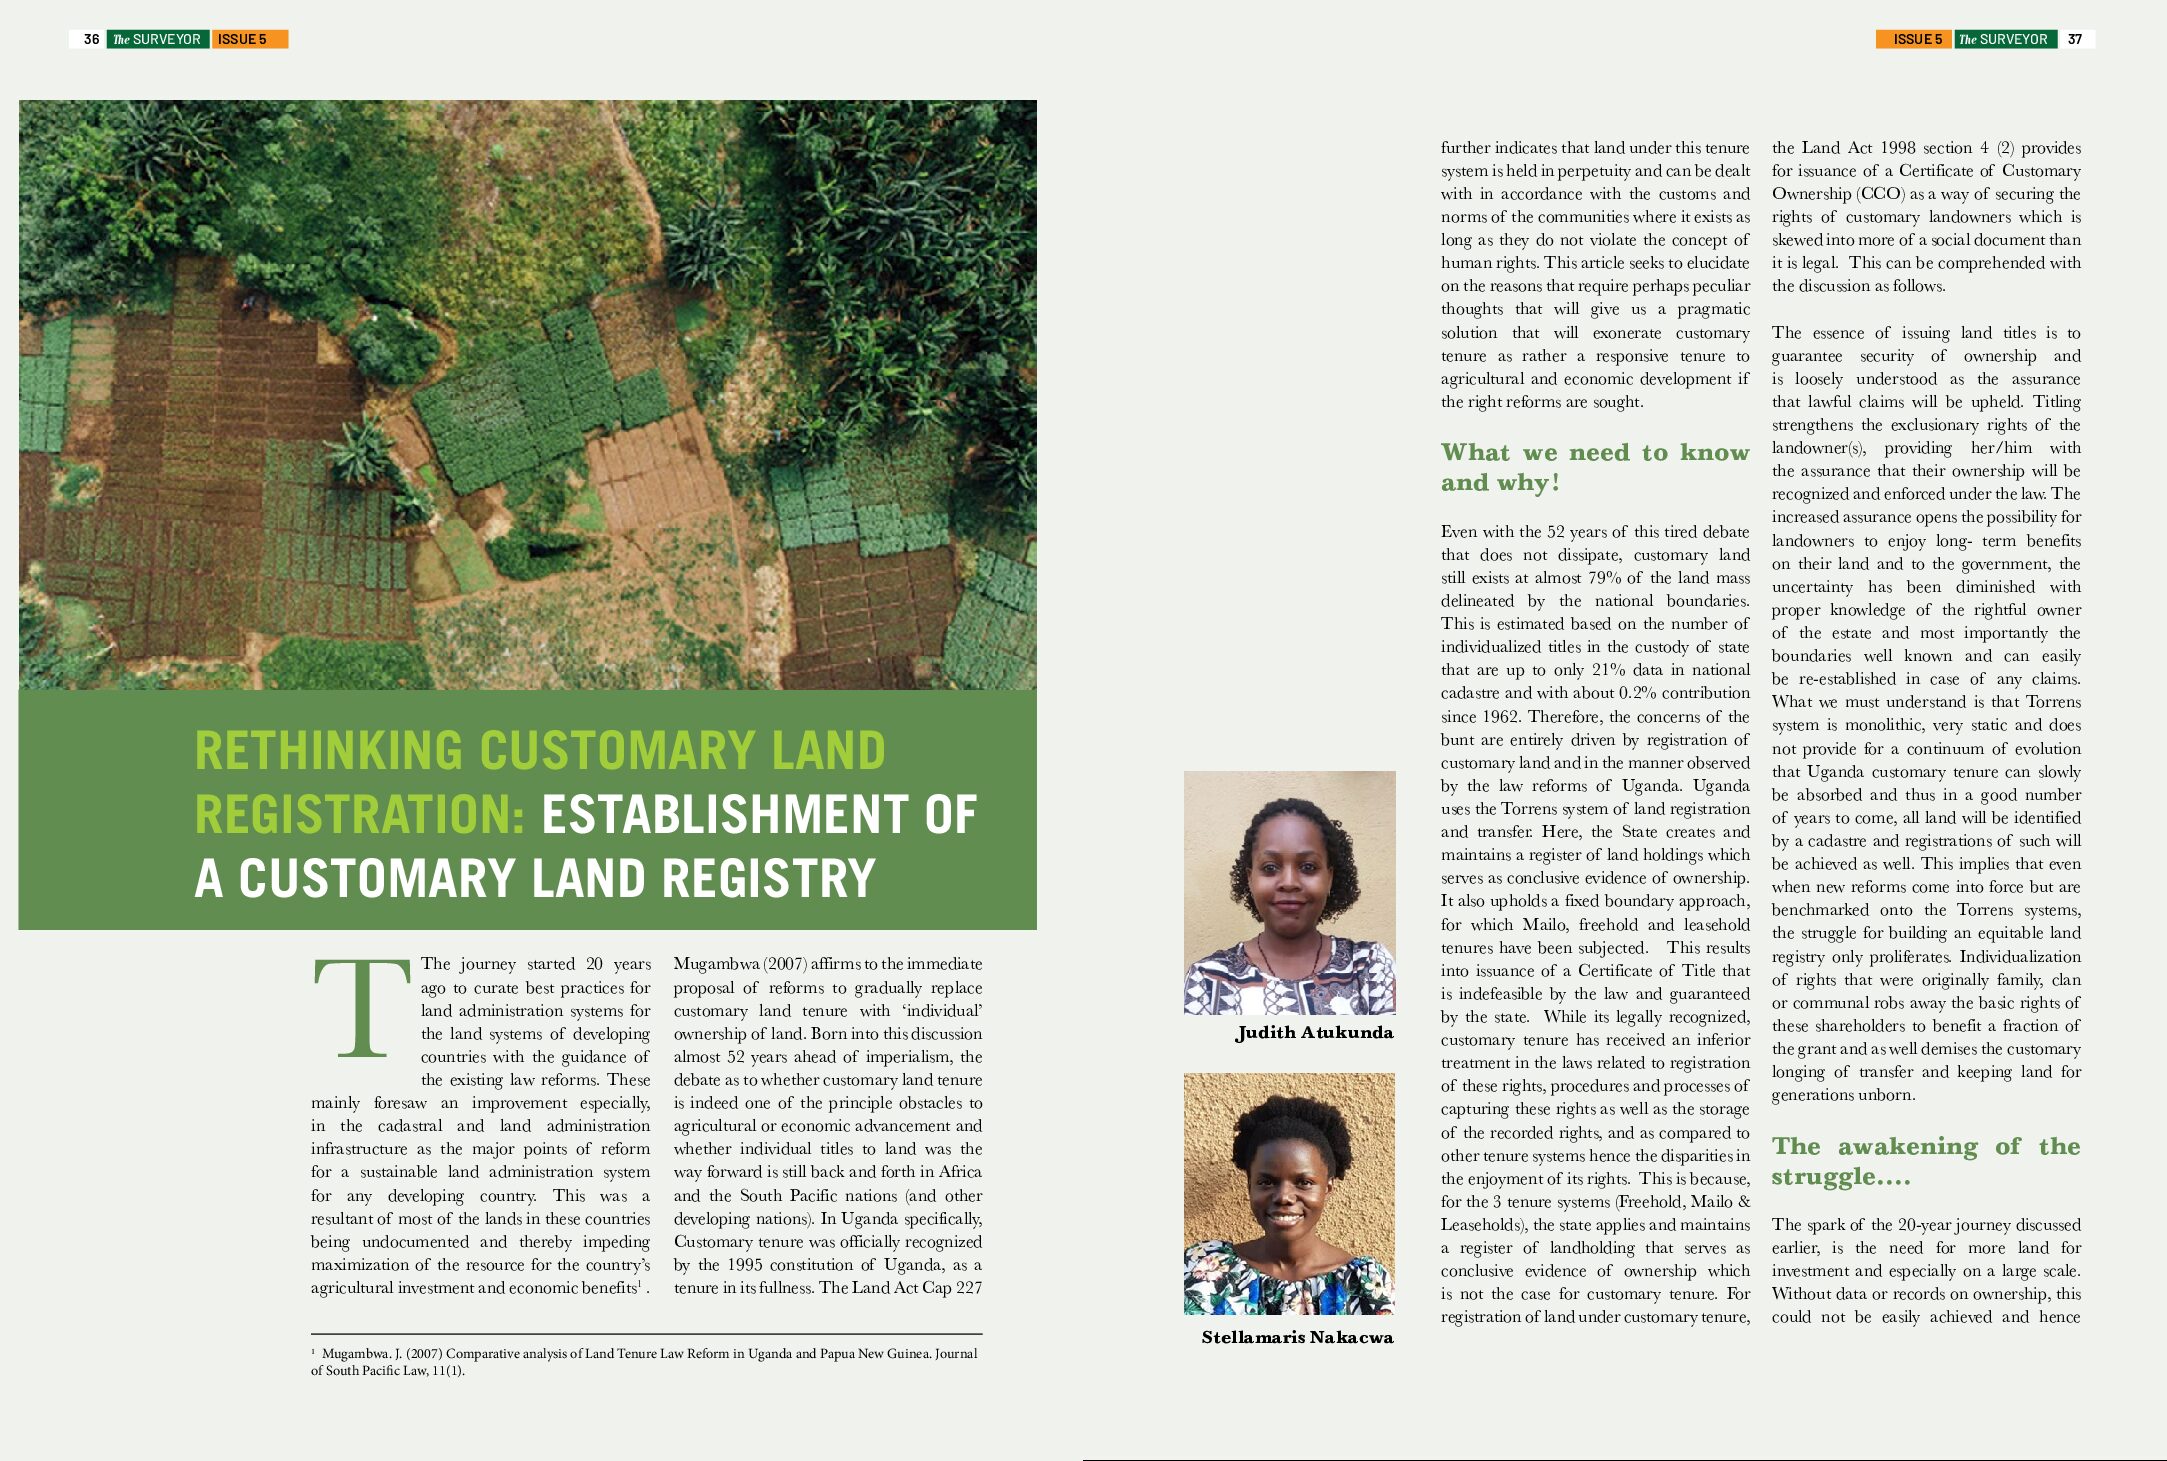 Rethinking Customary Land Registration: Establishment of a Customary Land Registry